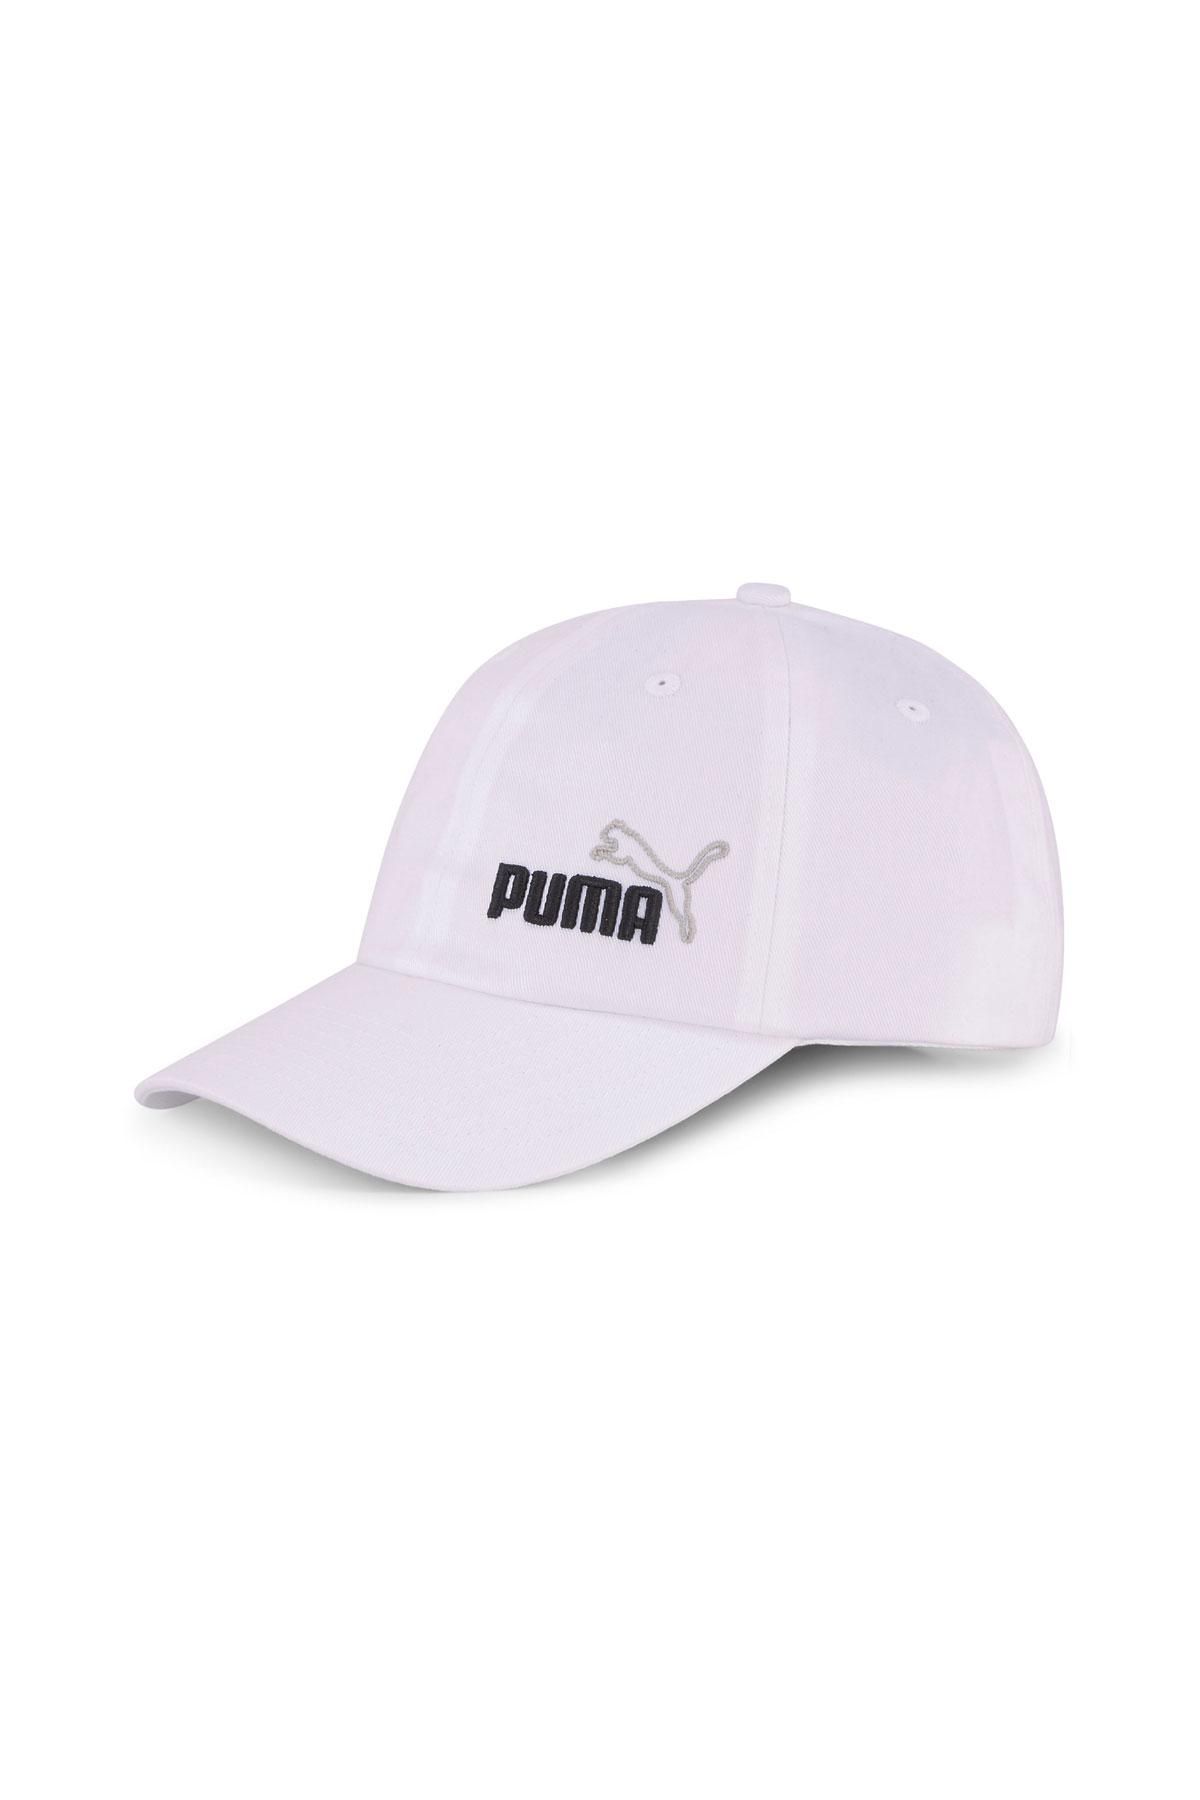 Puma White-No Ii Ess 1 Cap White PUMA Men Caps